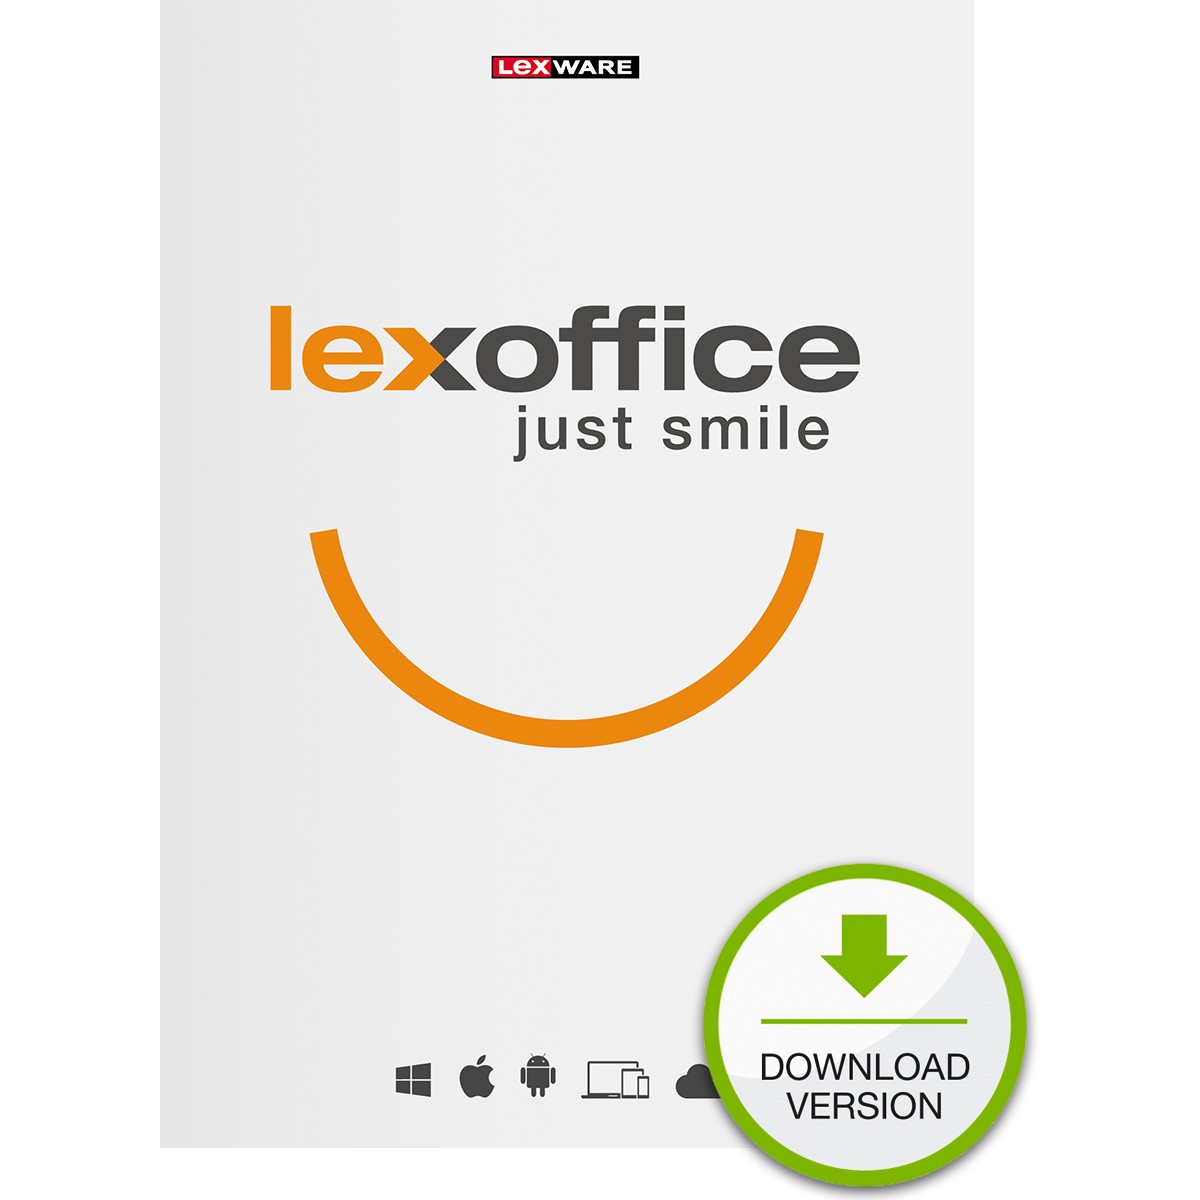 Lexware 01347-0563, ESD-Lizenzen, Lexware lexoffice XL 1  (BILD1)